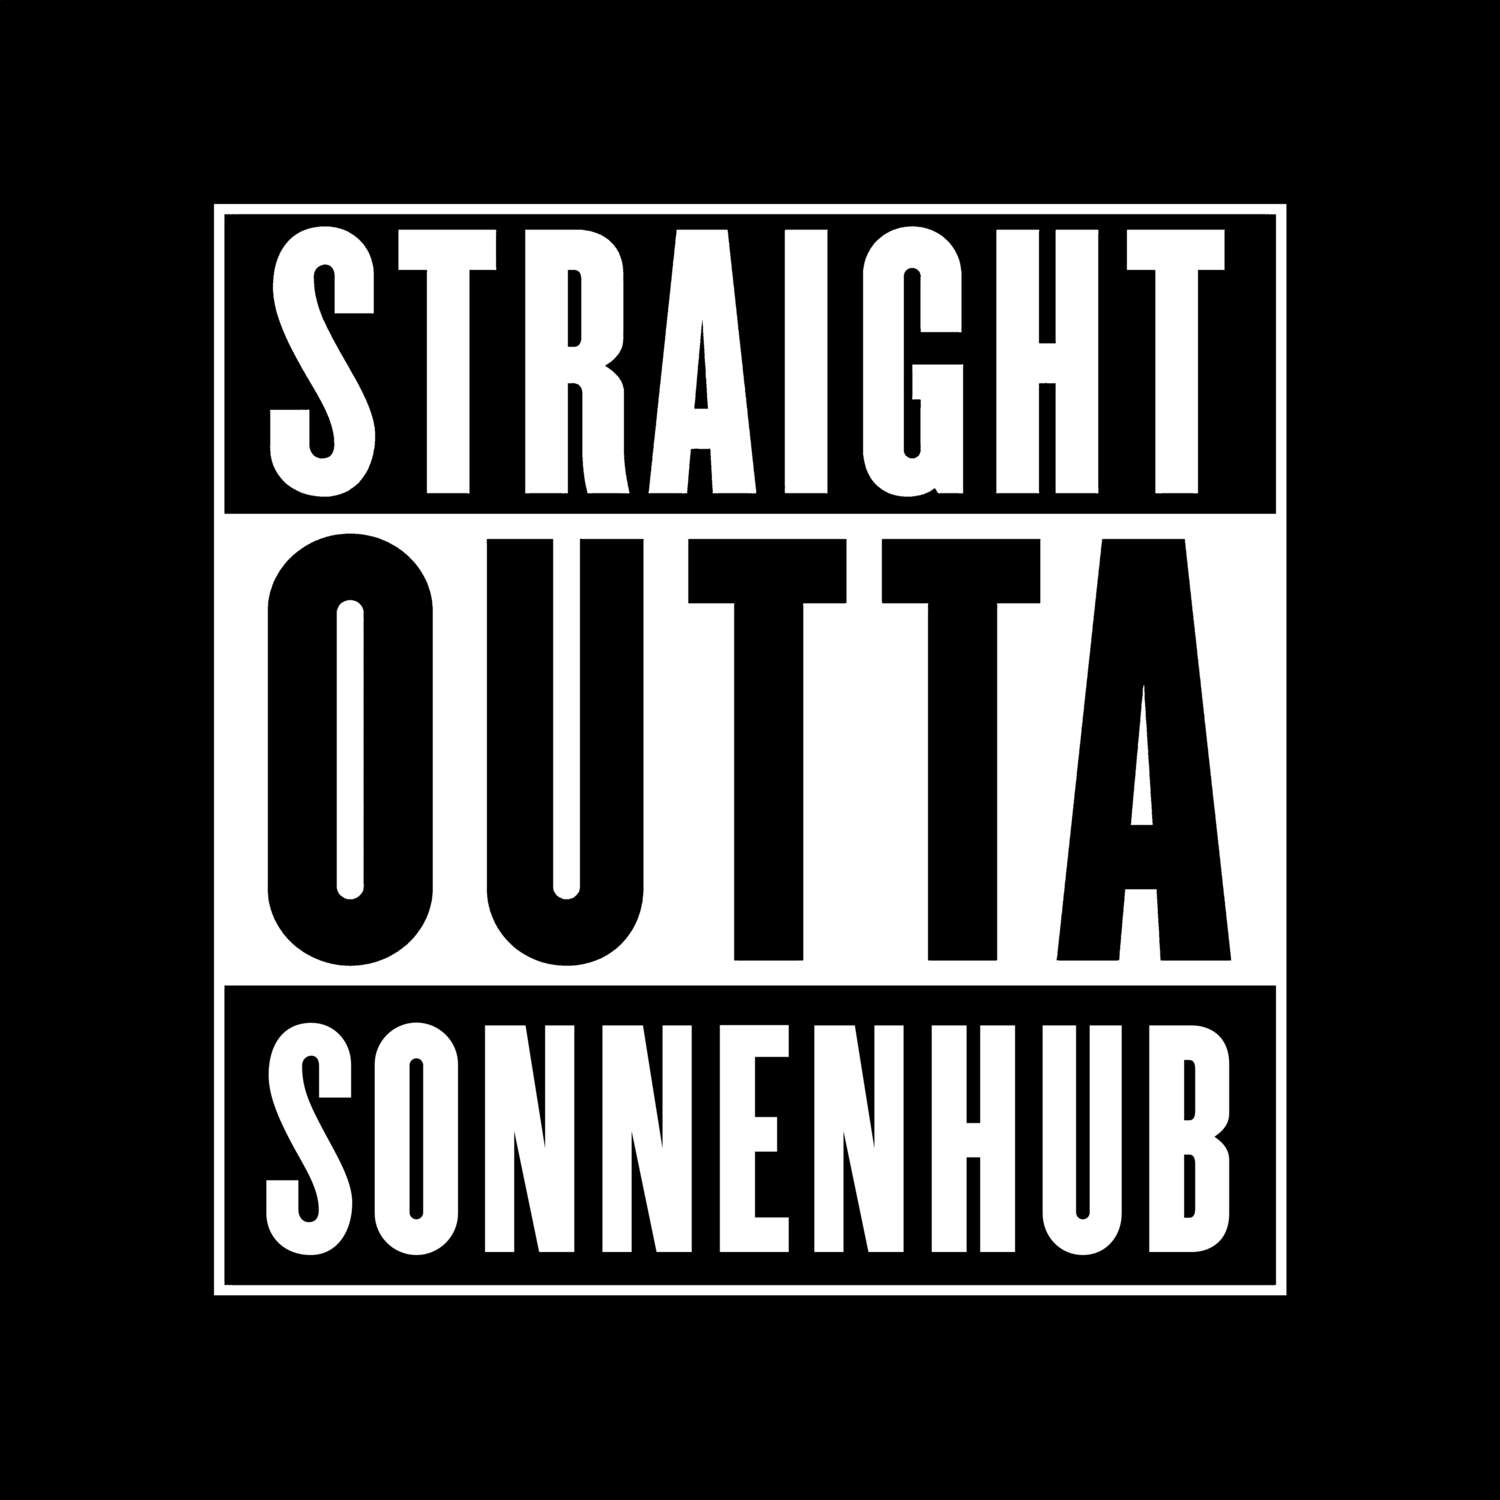 Sonnenhub T-Shirt »Straight Outta«